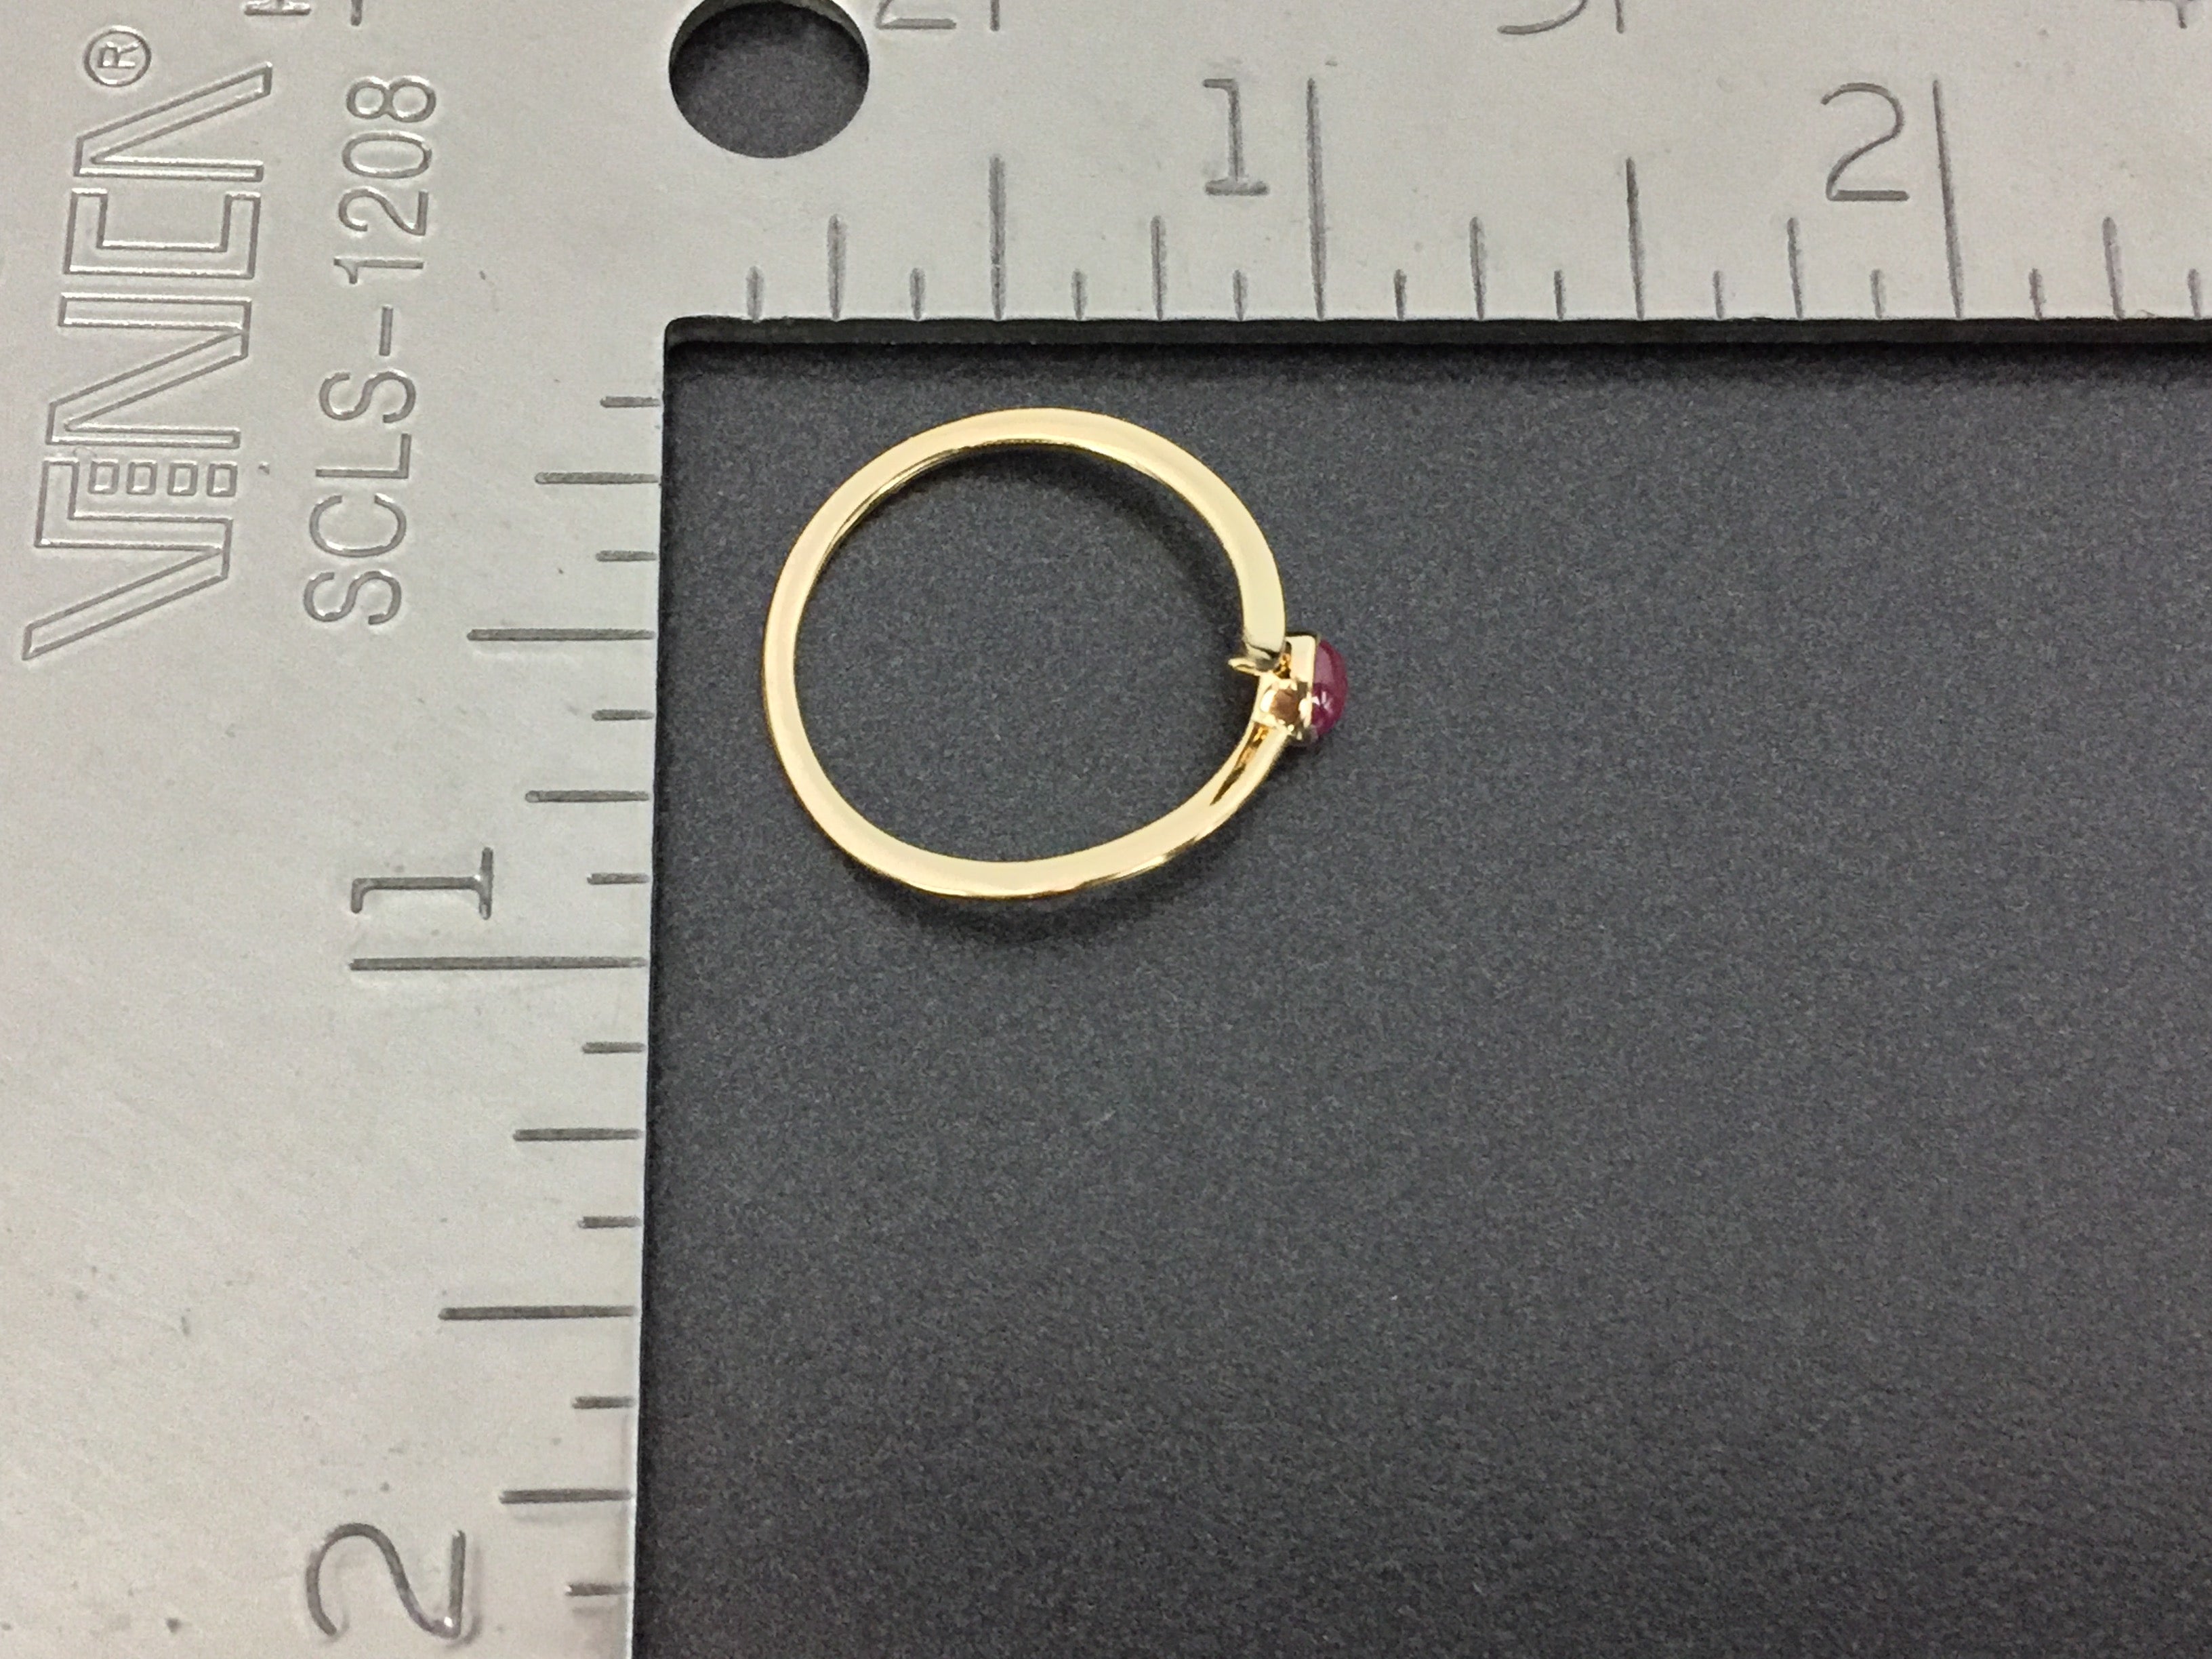 Southwestern Native Style 18K Gold .36ct Ruby Swirl Ring Size 6.75